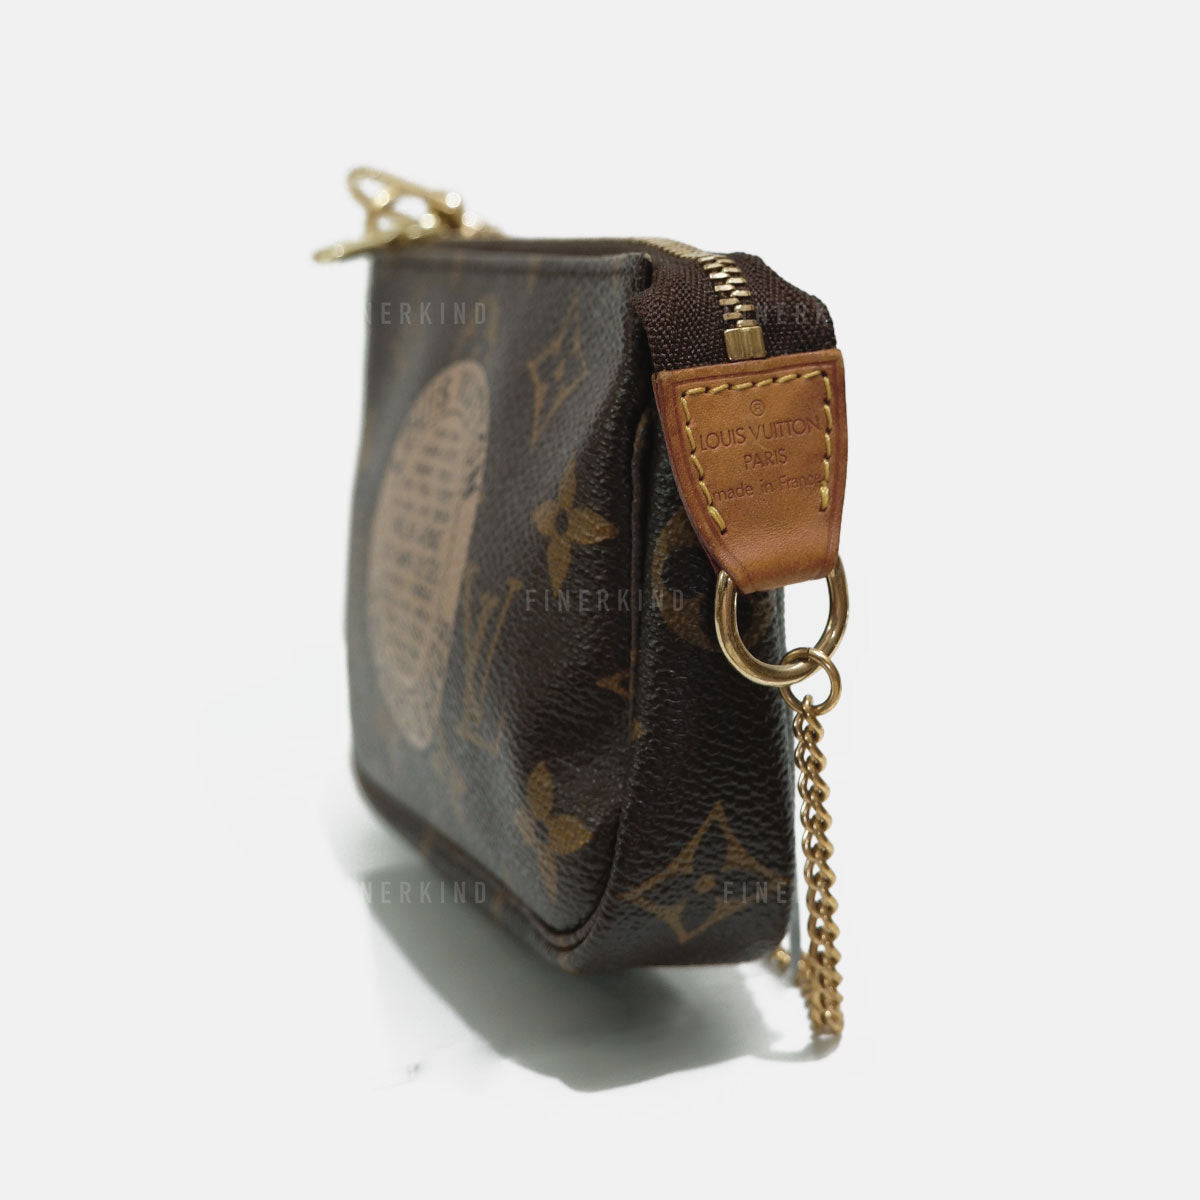 2008 Monogram Trunks & Bags Mini Pochette Accessoires Collector's Item